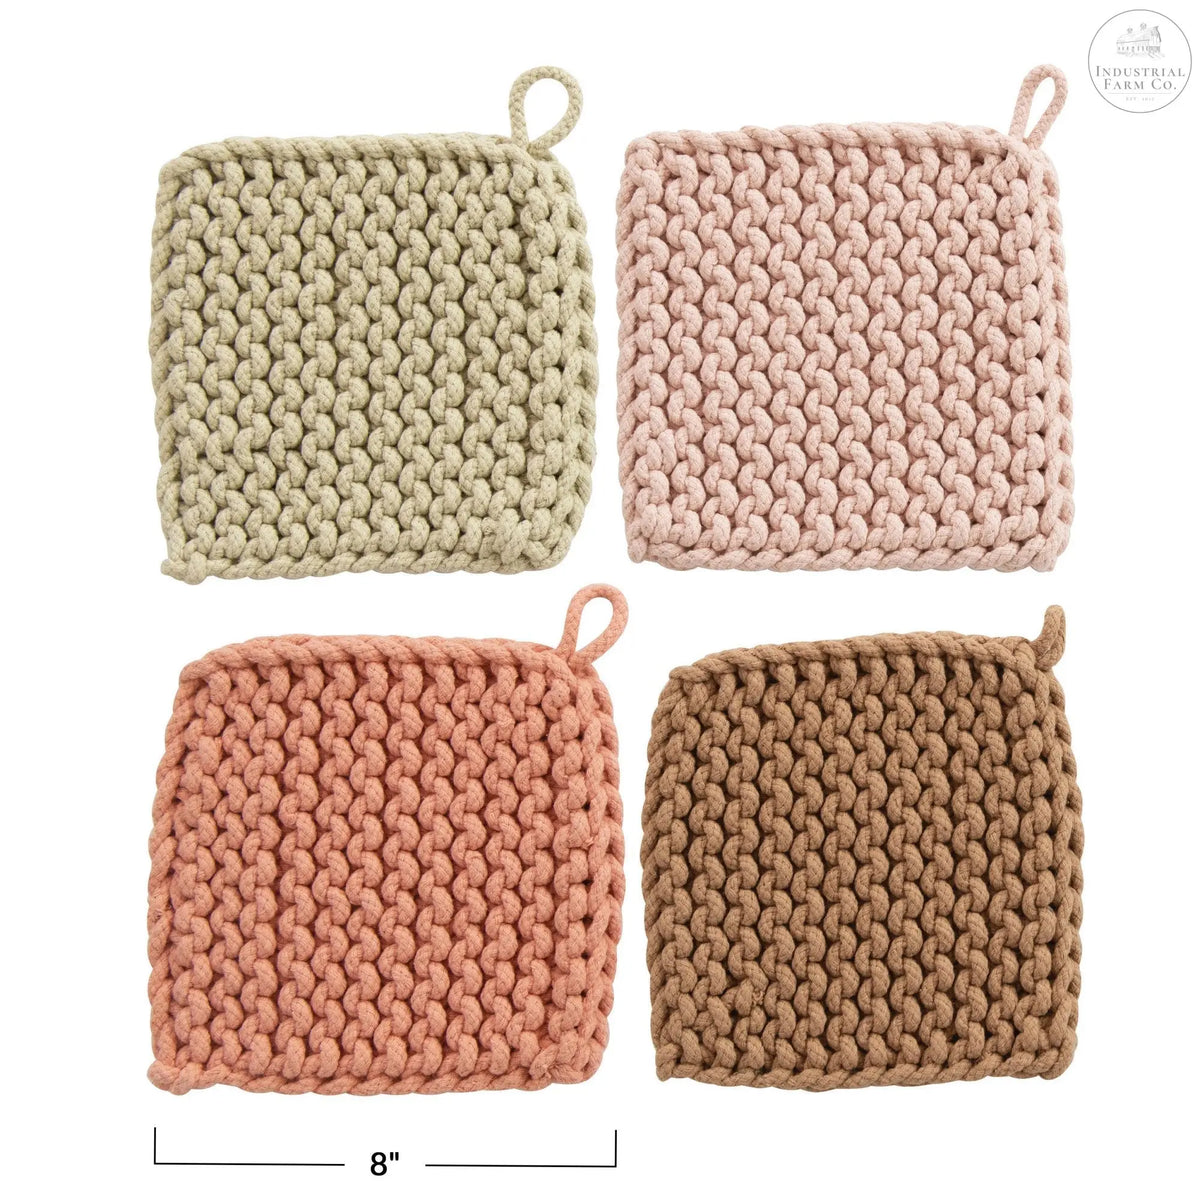 Modern Kitchen Crocheted Potholder  Pink   | Industrial Farm Co